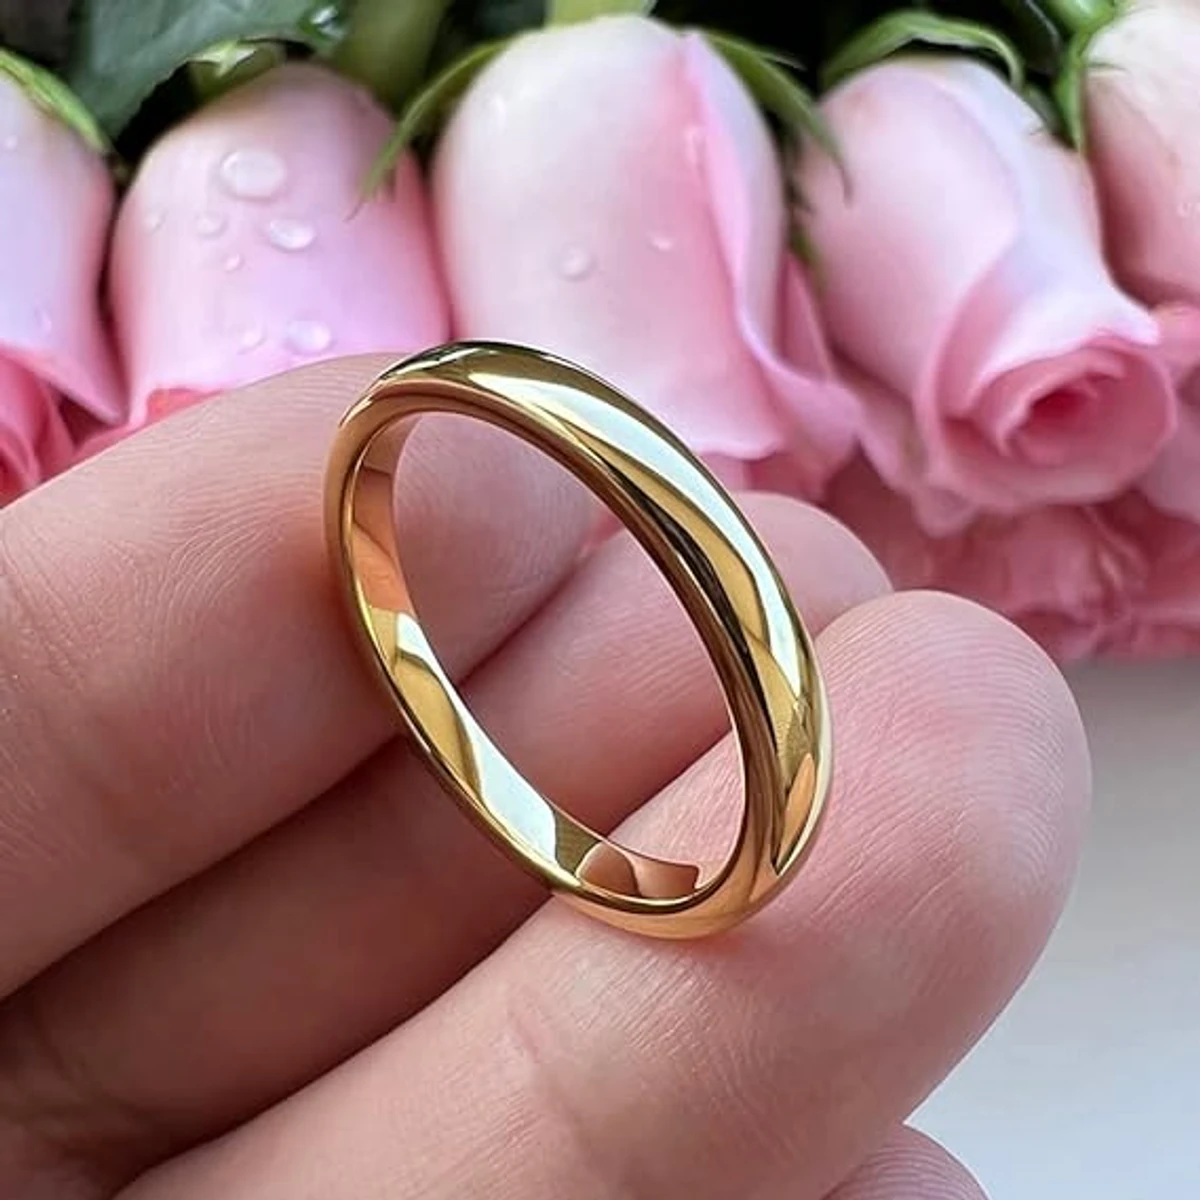 Good Quality Stylish Finger Stainless Steel Ring For Men